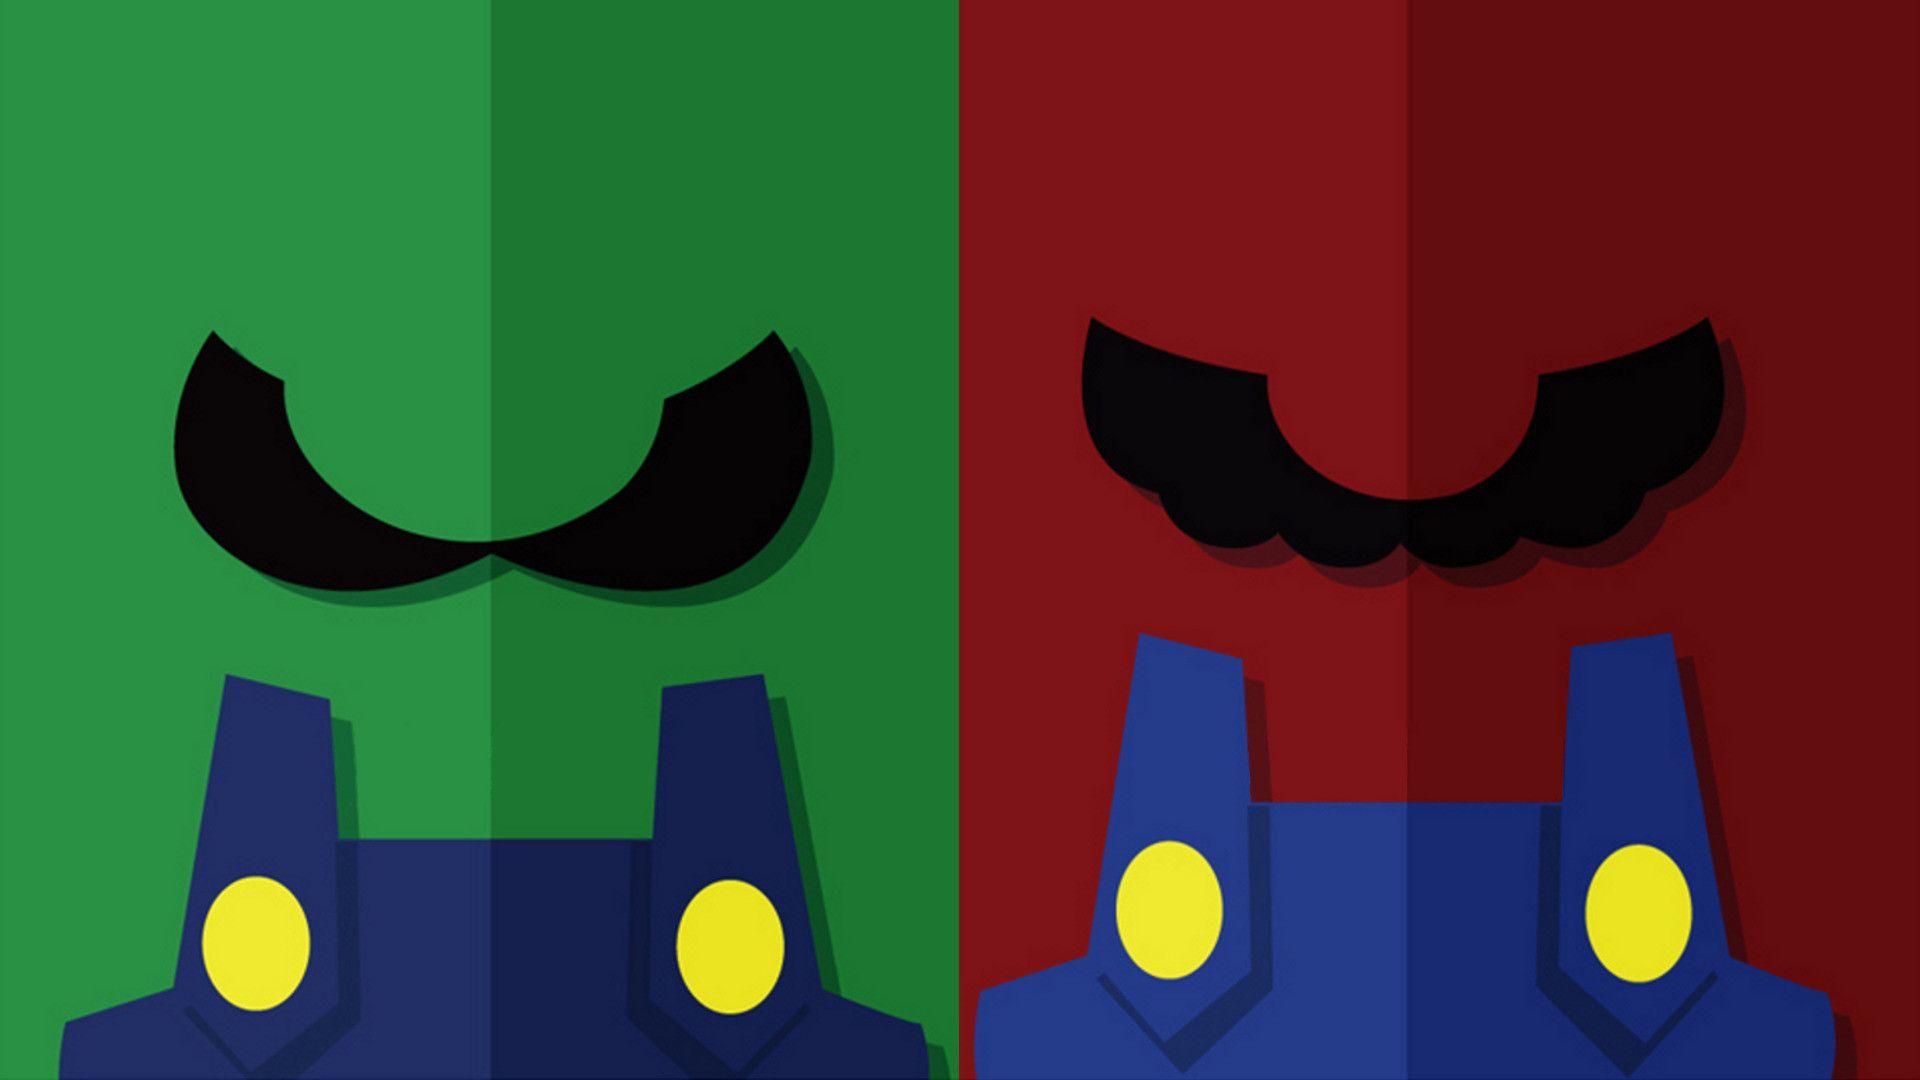 Mario and Luigi Wallpapers HD